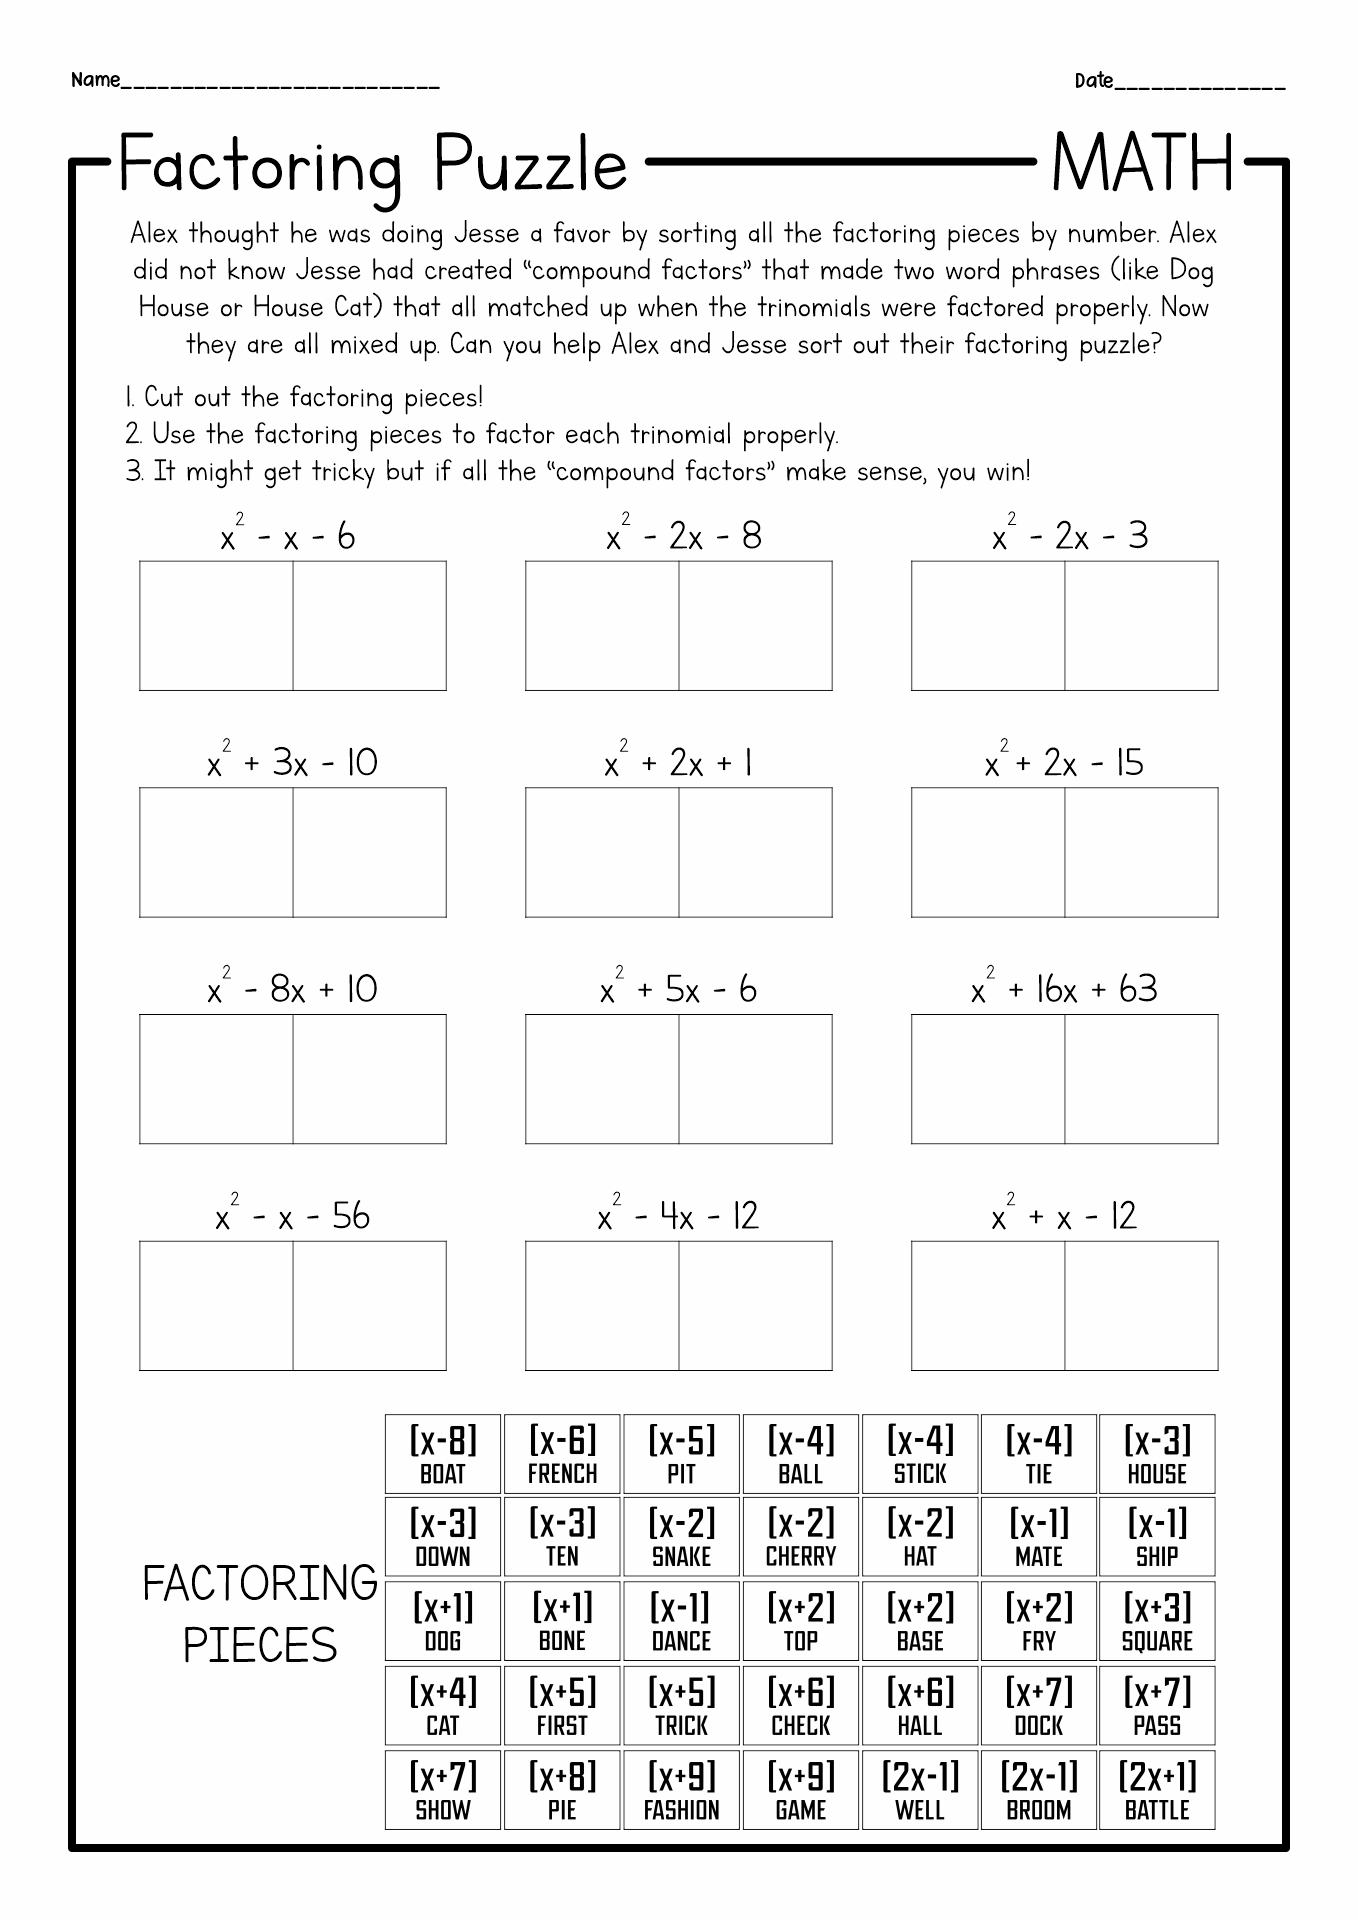 Factoring Puzzle Worksheet Image